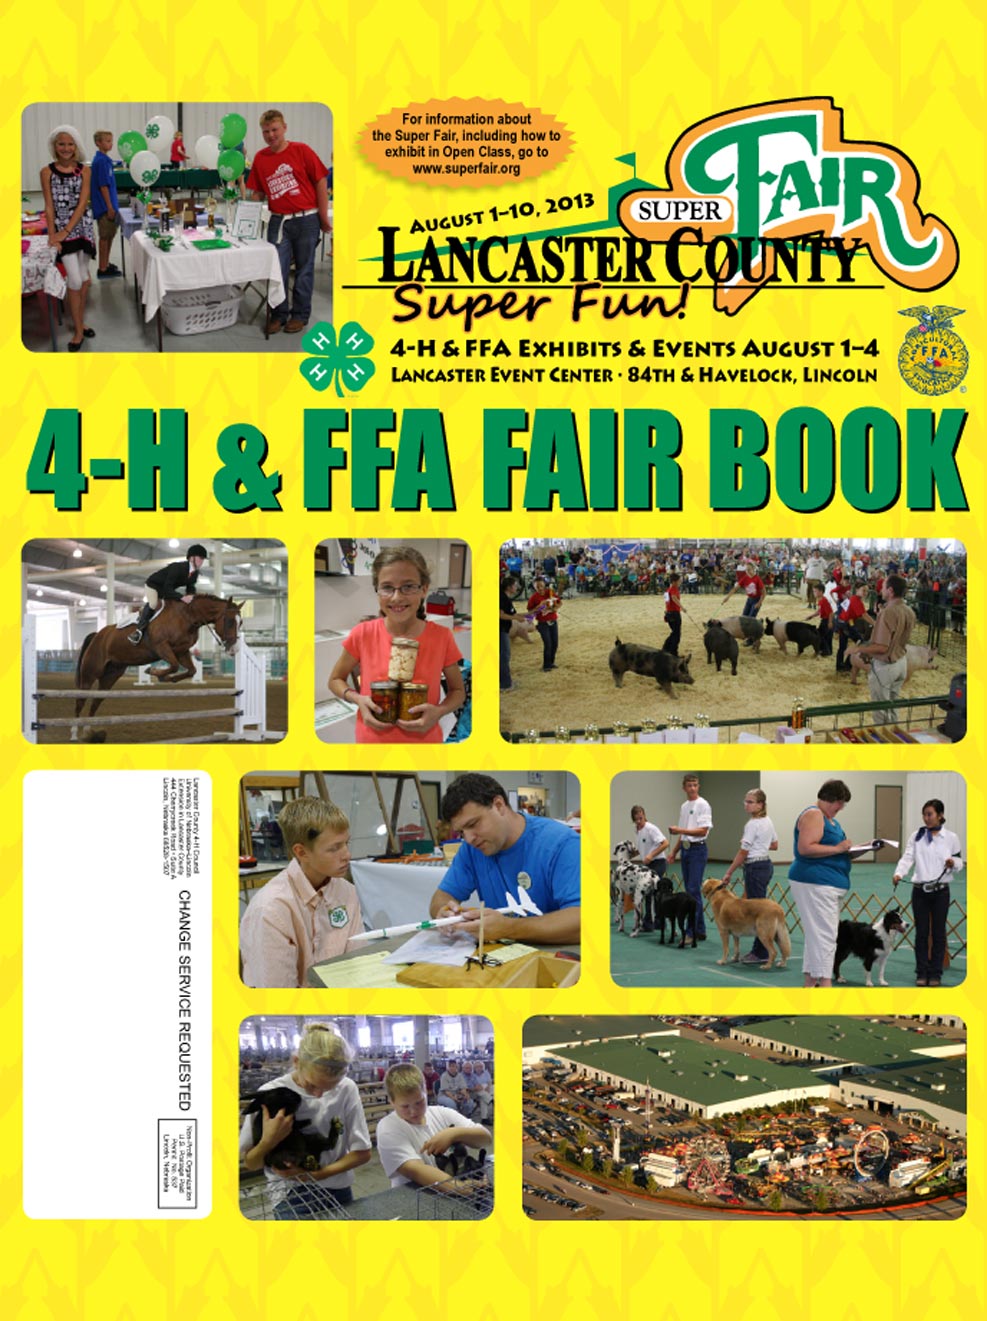 4 H Ffa Fair Books Published Soon Announce University Of Nebraska Lincoln